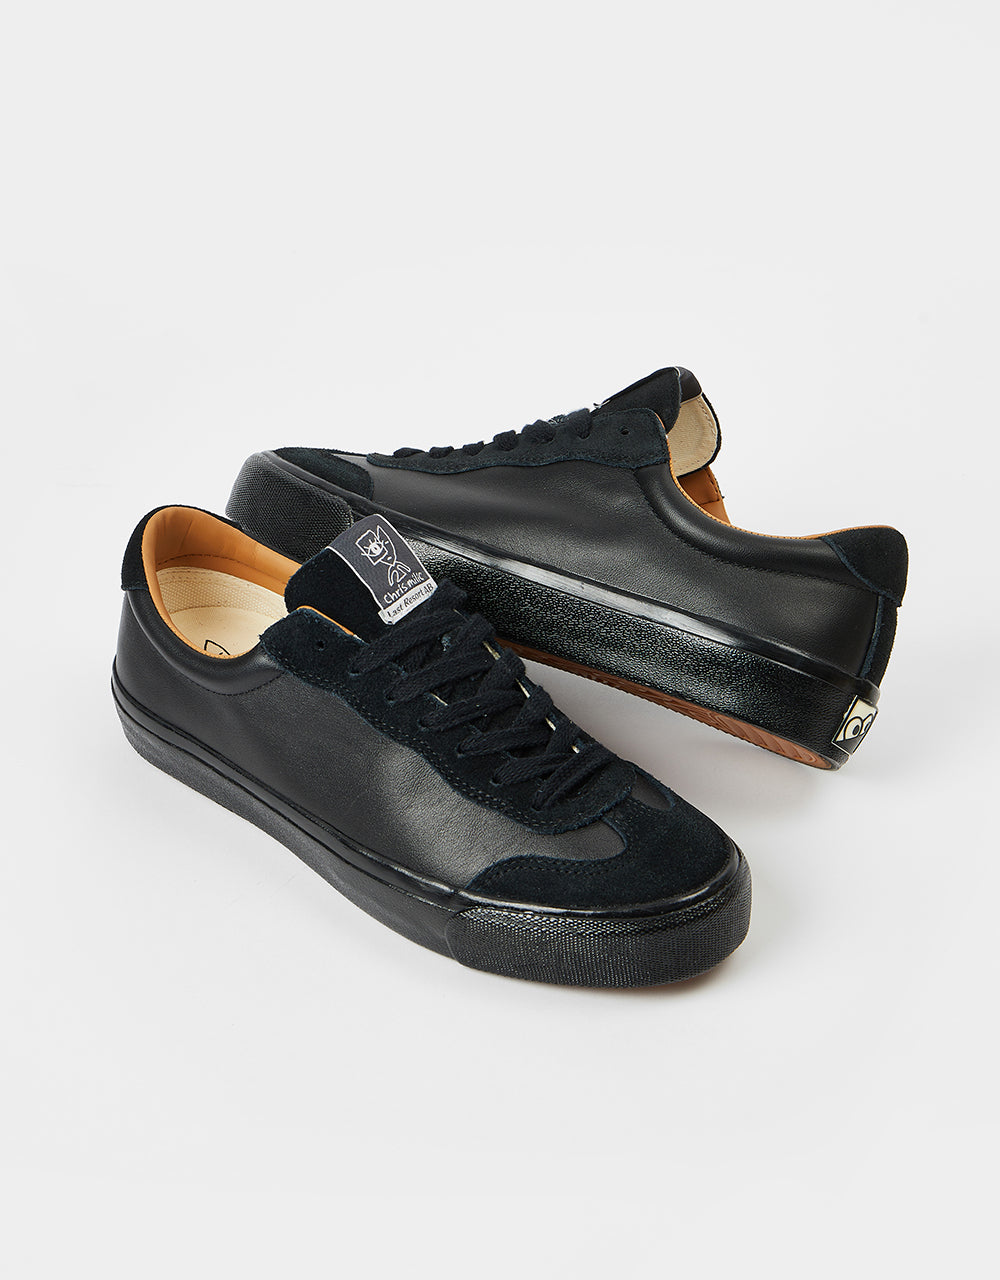 Last Resort AB VM004 Milic Leather/Suede Lo Skate Shoes - Duo Black/Black